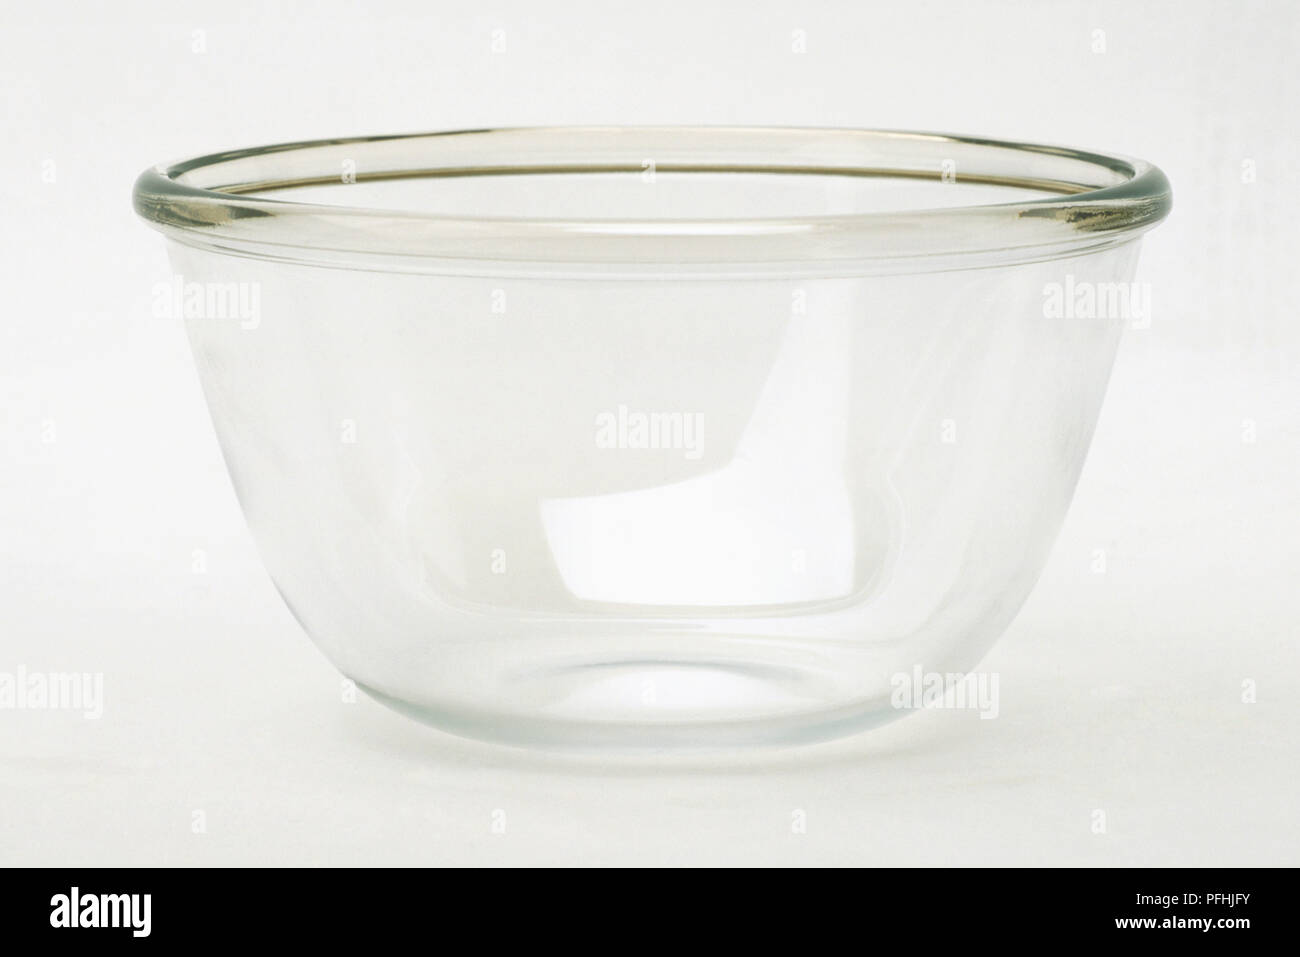 https://c8.alamy.com/comp/PFHJFY/a-large-glass-bowl-PFHJFY.jpg